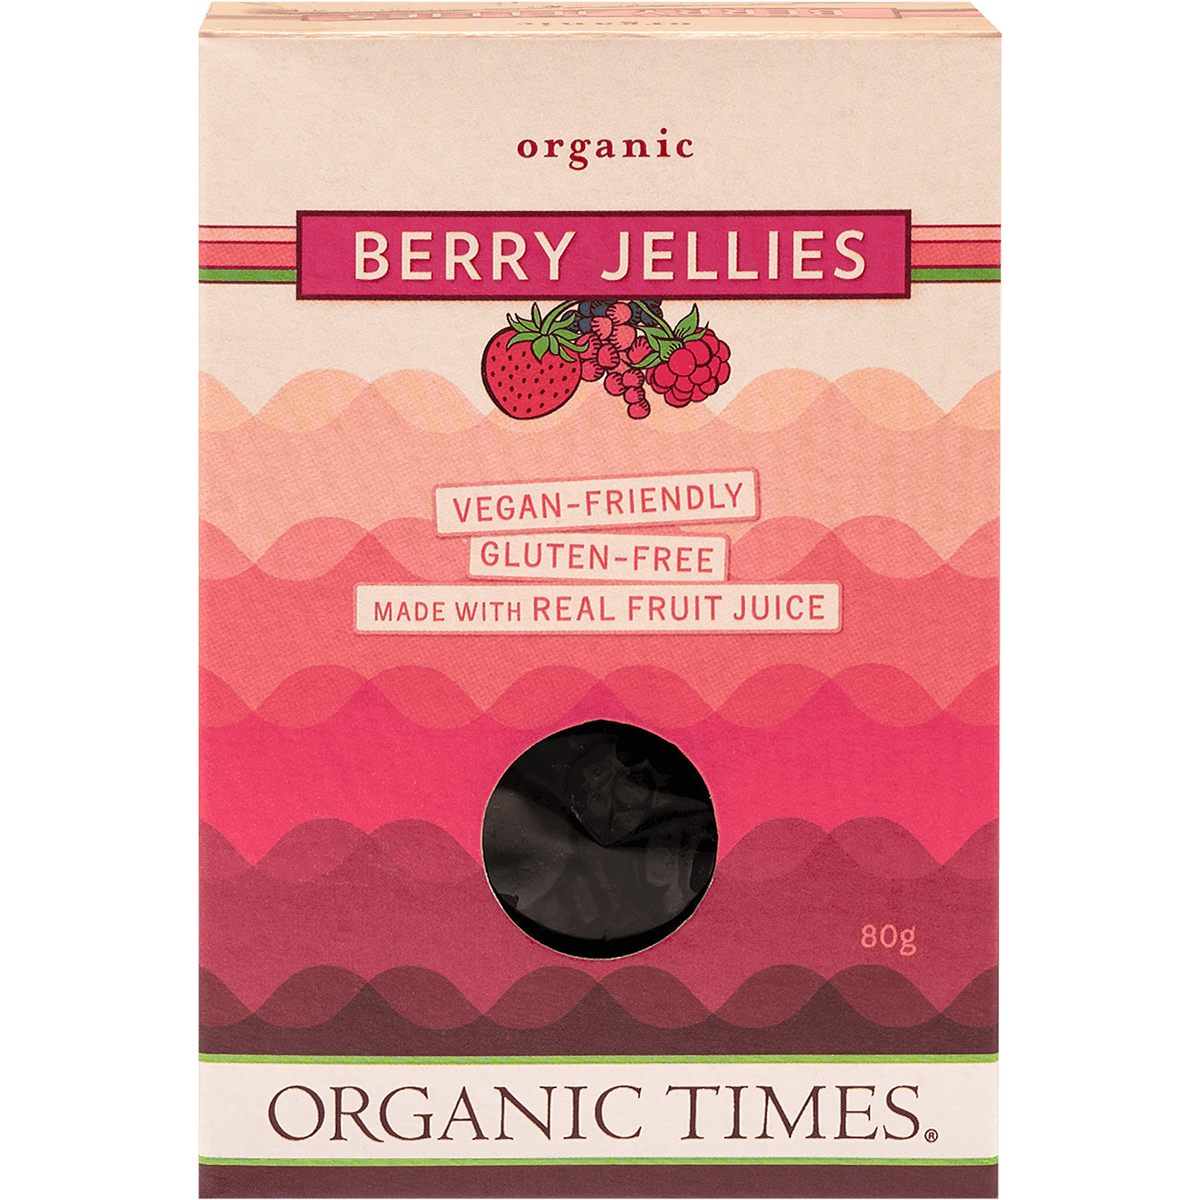 organic times berry jellies box